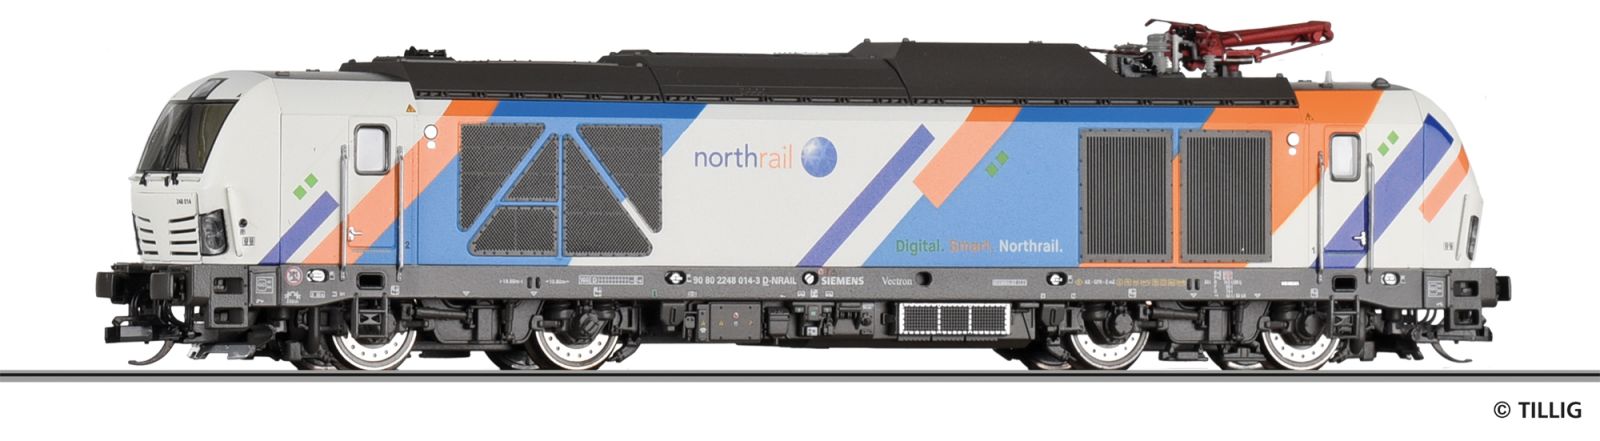 Zweikraftlokomotive Northrail GmbH